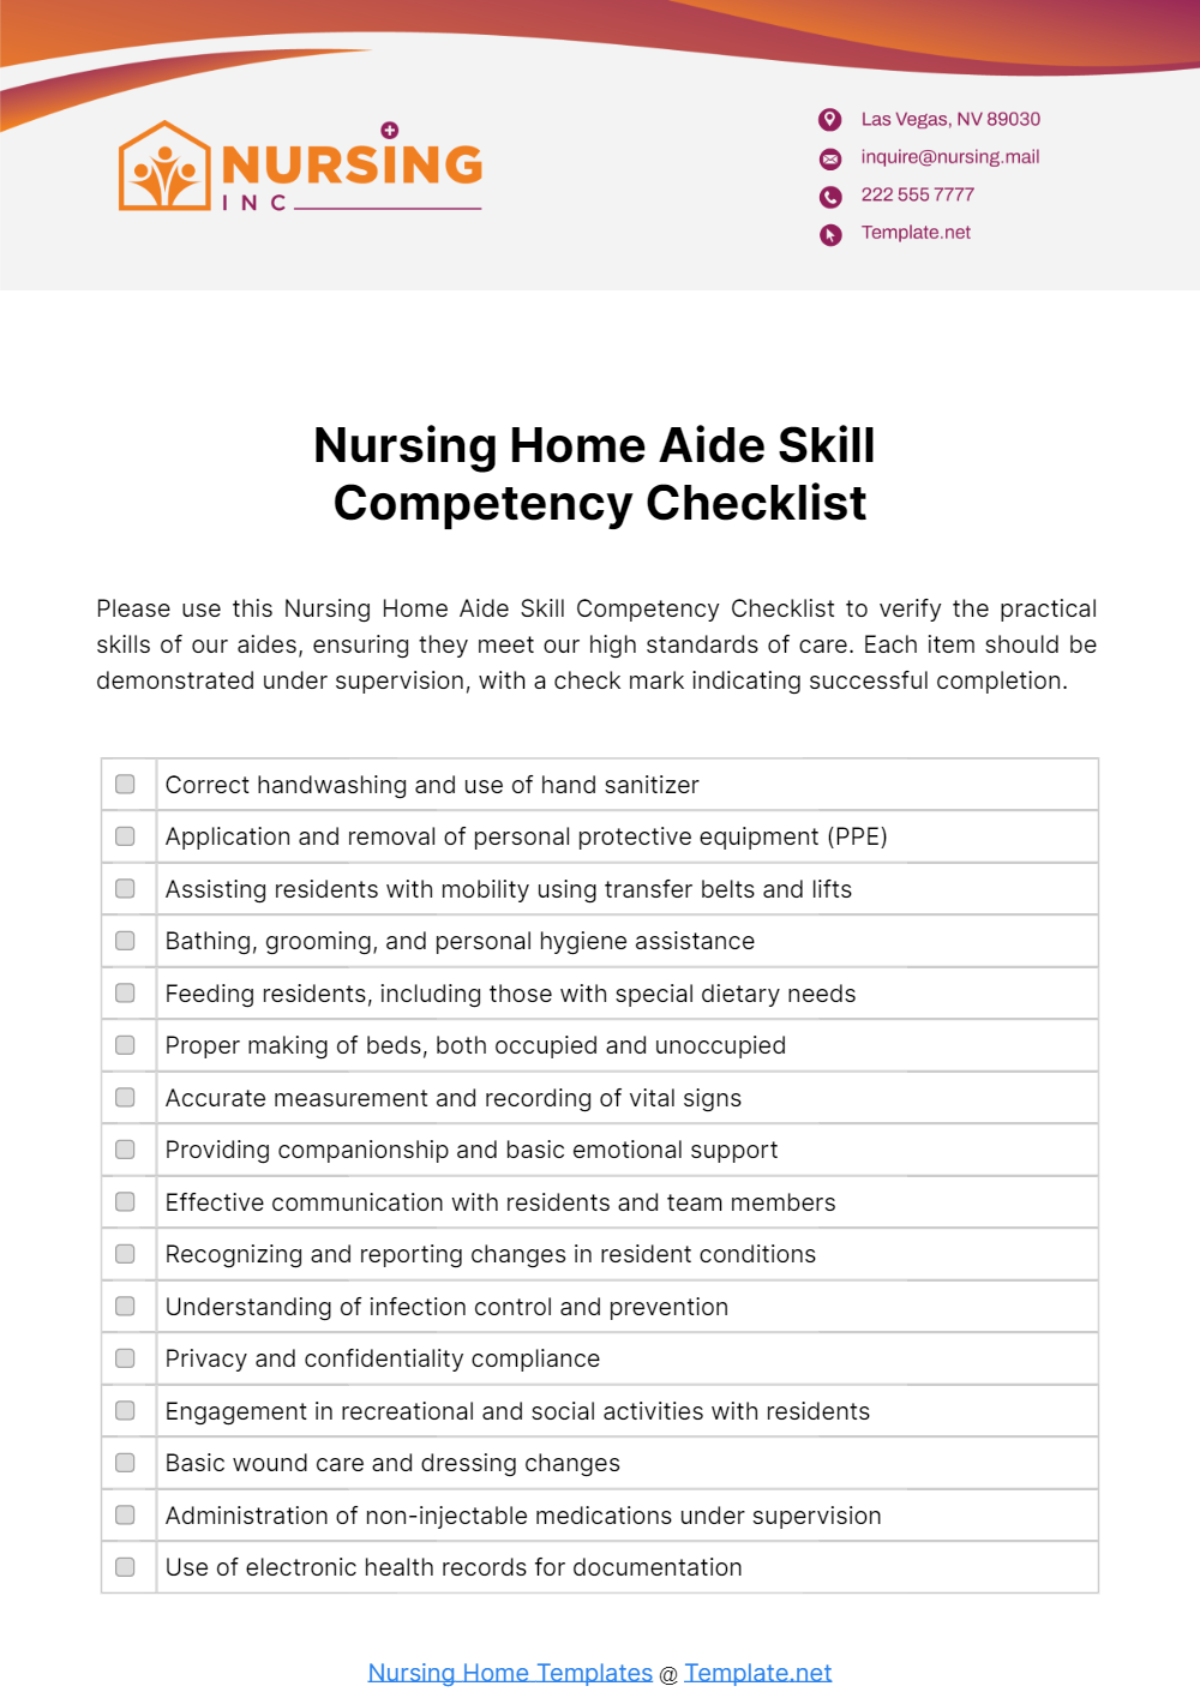 Free Nursing Home Aide Skill Competency Checklist Template